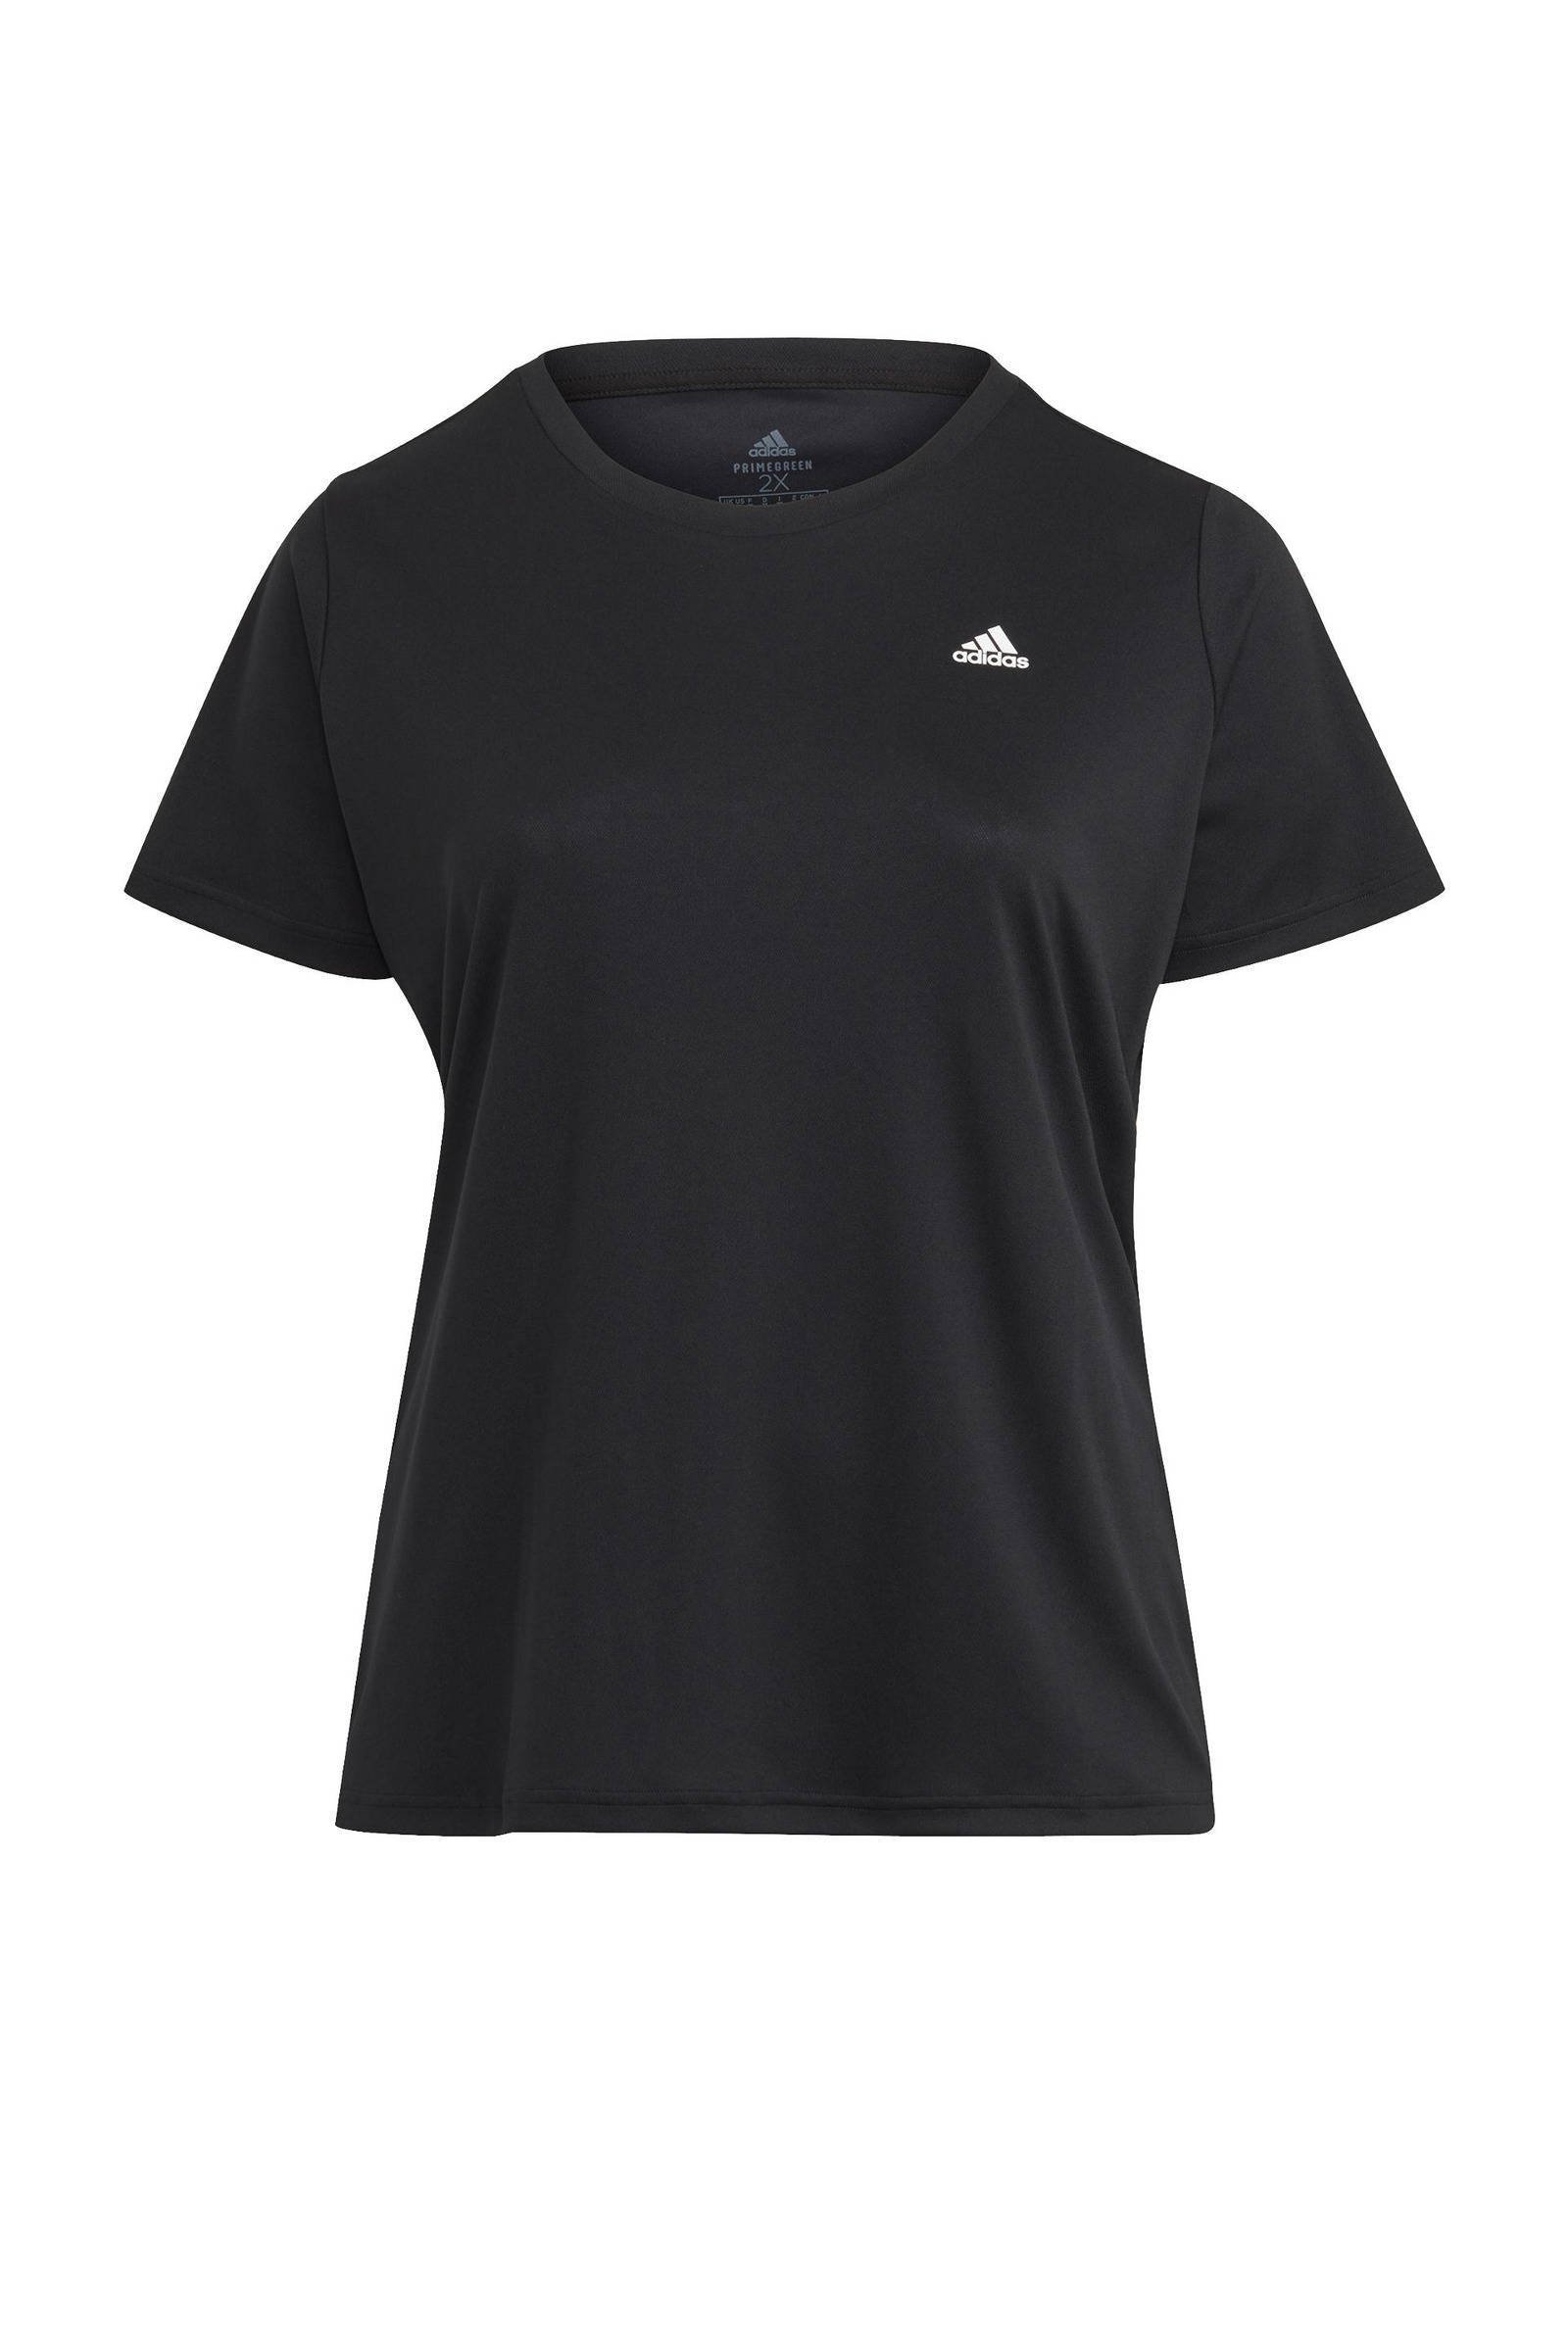 Adidas Performance Plus Size sport T shirt zwart/wit online kopen